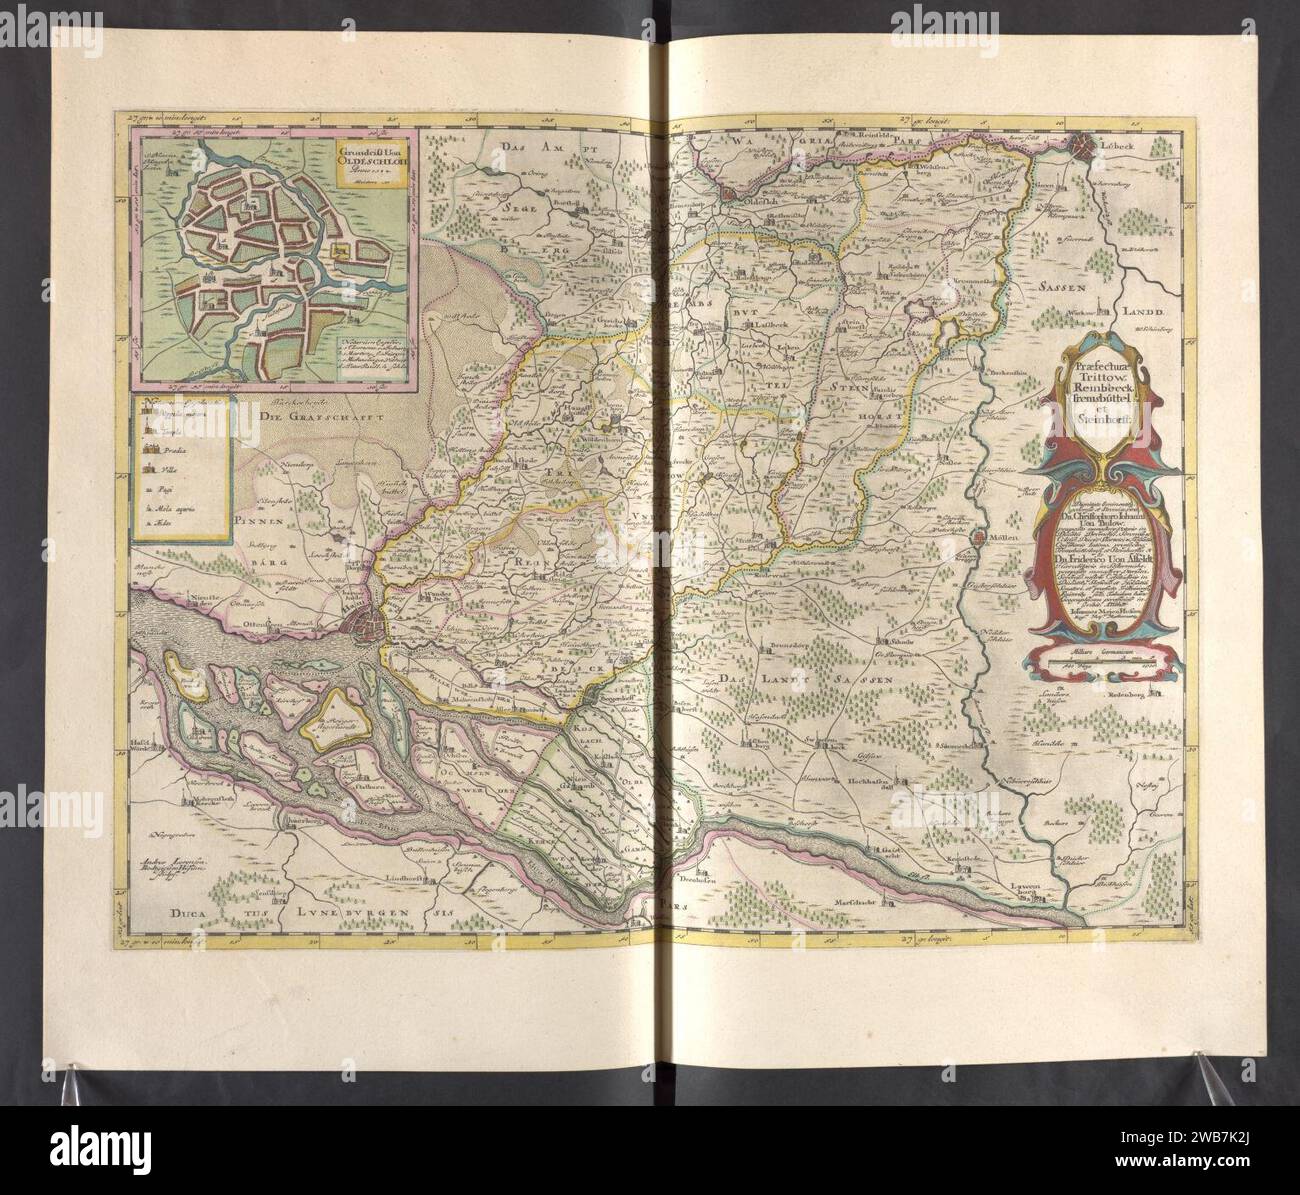 Præfectura Trittow, Reinbeeck, Tremsbüttel et Steinhorst - Atlas Maior, Band 3, Karte 48 - Joan Blaeu, 1667 Stockfoto